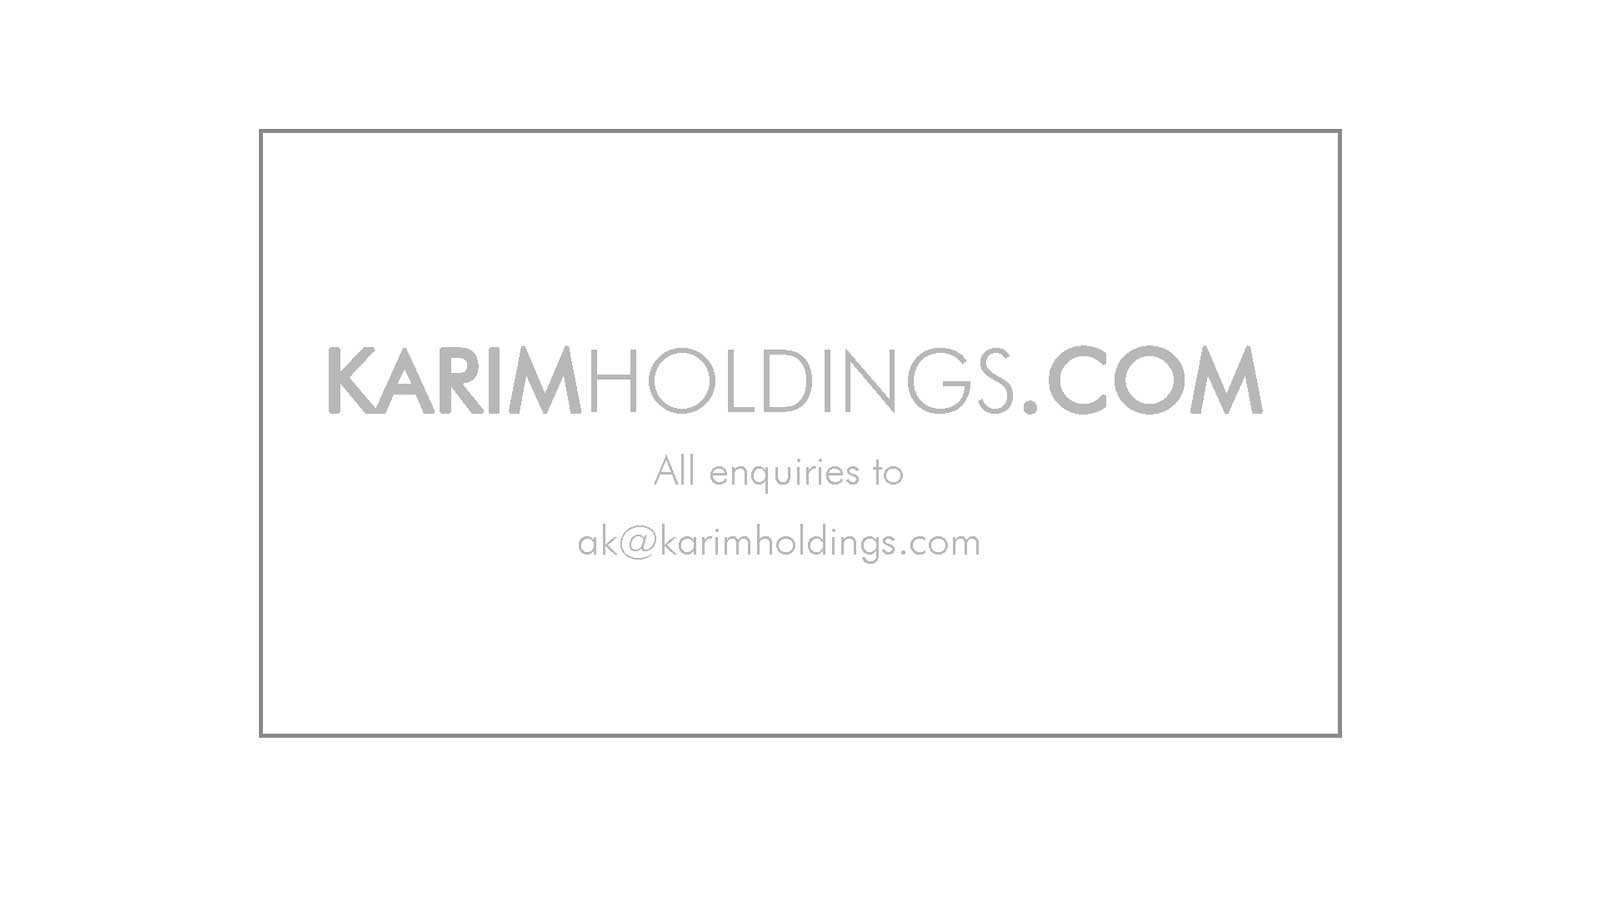 Karm holdings